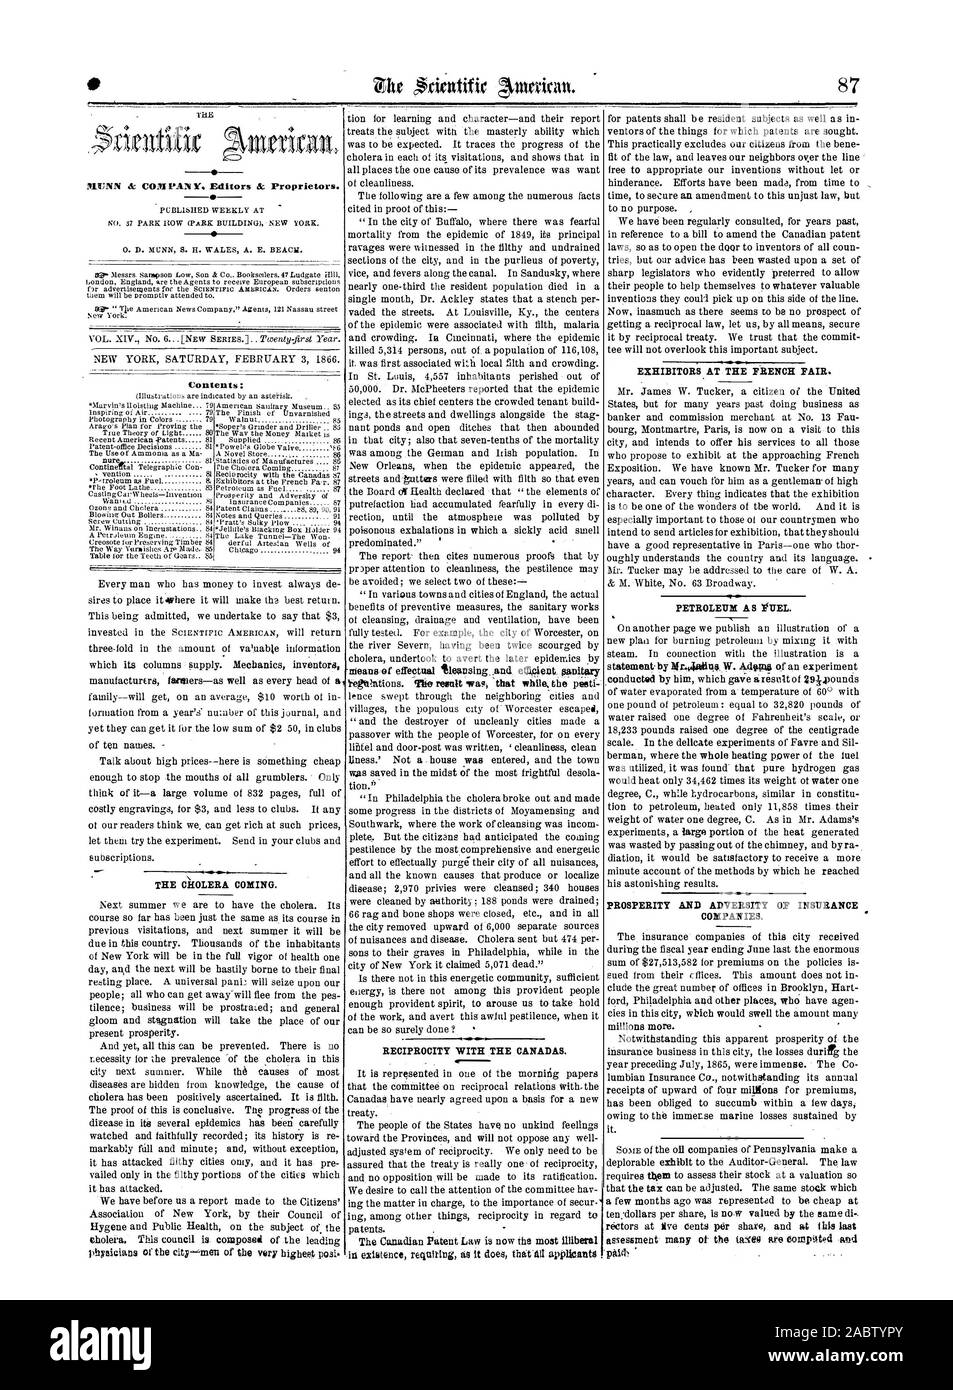 MENAI COMPANY Editors & Proprietors. Contents: THE CHOLERA COMING. RECIPROCITY WITH THE CANADAS. EXHIBITORS AT THE FRENCH FAIR. PETROLEUM A S FUEL. PROSPERITY AND ADVERSITY OF INSURANCE COMPANIES., scientific american, 1866-02-03 Stock Photo